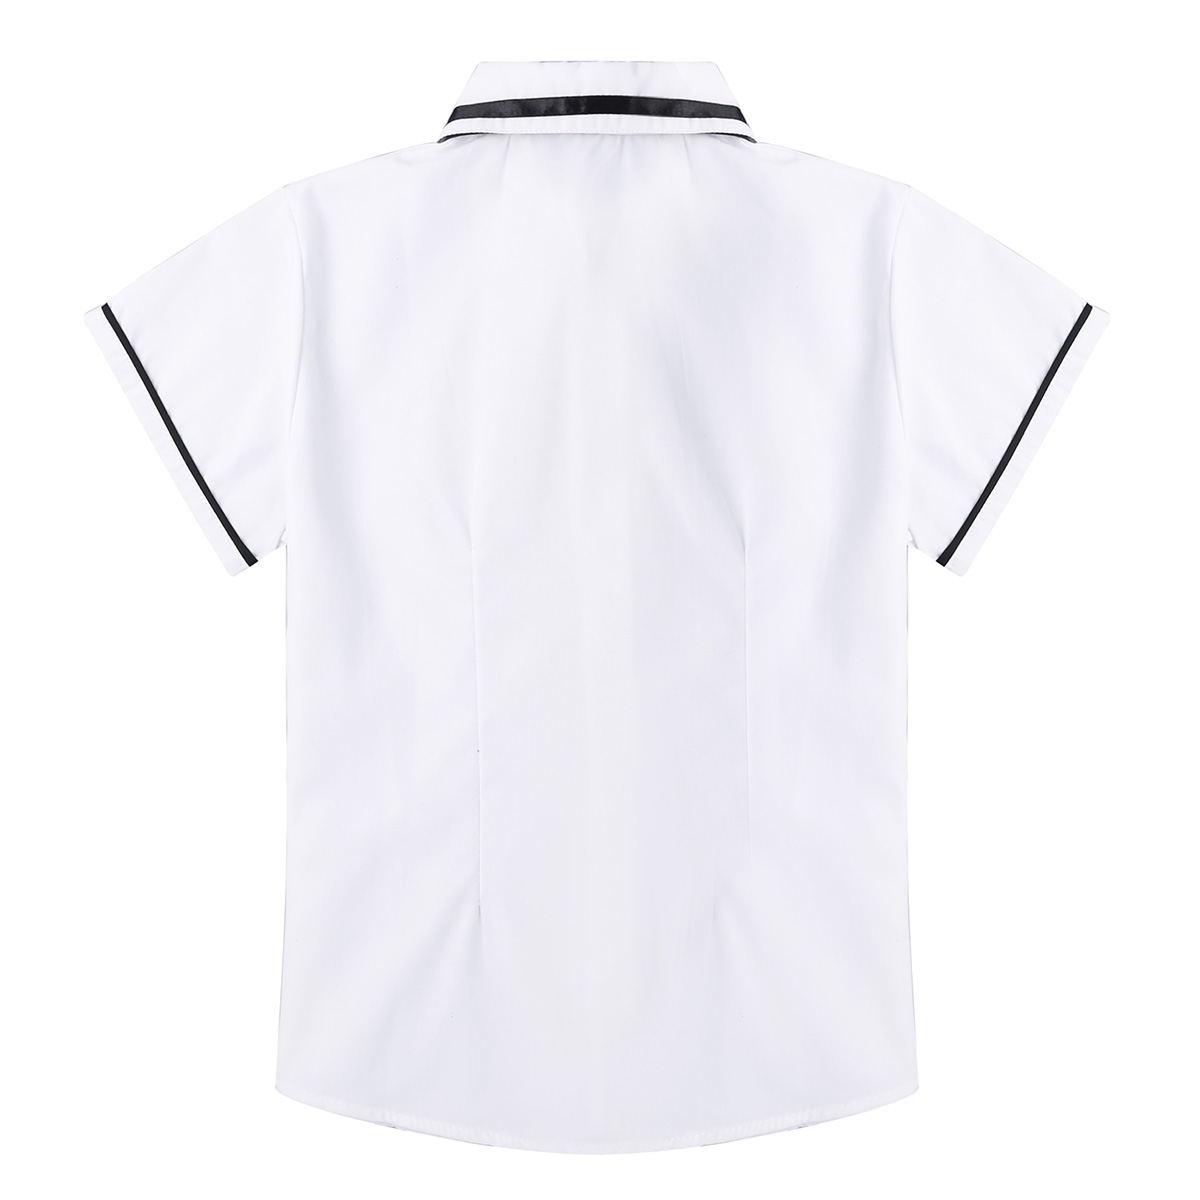 TiaoBug Japanese School Girl Uniform Suit White Short Sleeve T-shirt Top Pleated Skirt Cosplay Korean Girls Student Costume Set Image